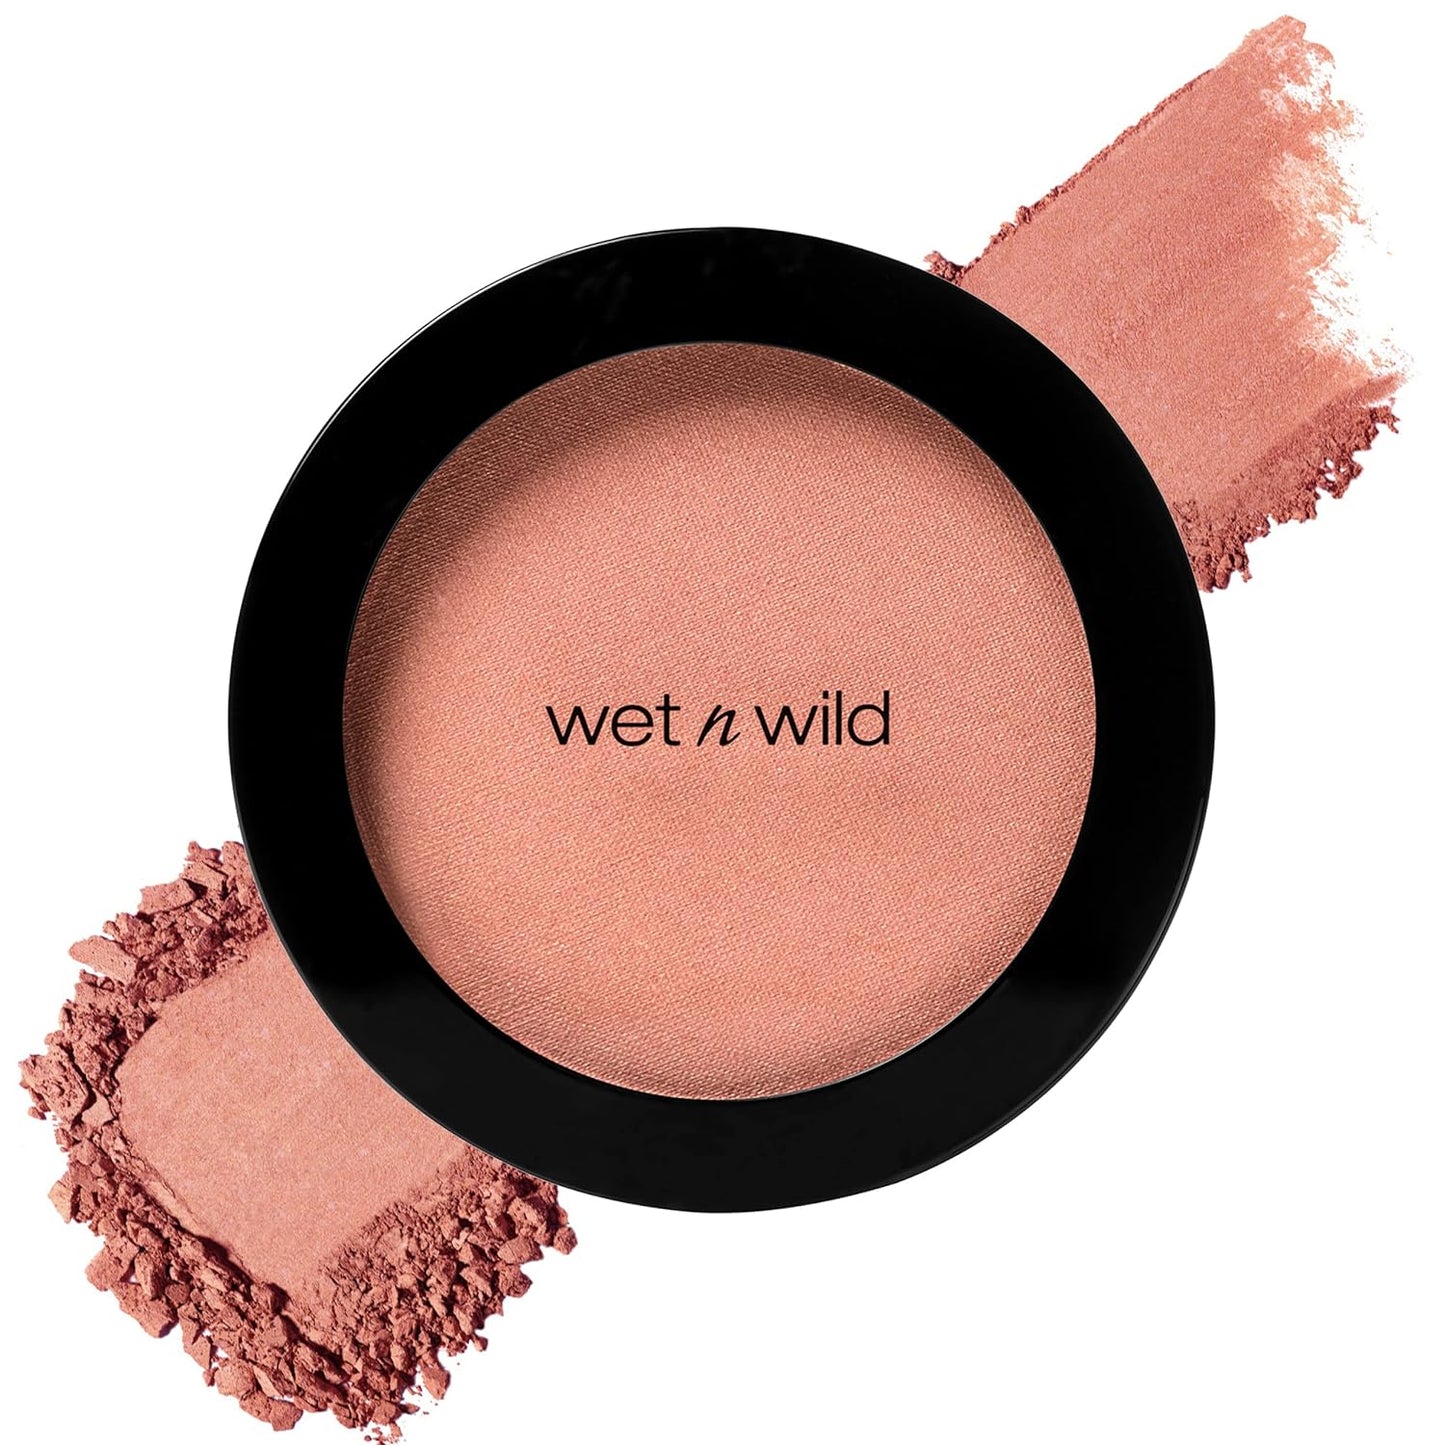 Wet n Wild Color Icon Blush Powder Makeup, Pinch Me Pink | Matte Natural Glow | Moisturizing Jojoba Oil - Premium Blush from Concordia Style Boutique - Just $4.65! Shop now at Concordia Style Boutique